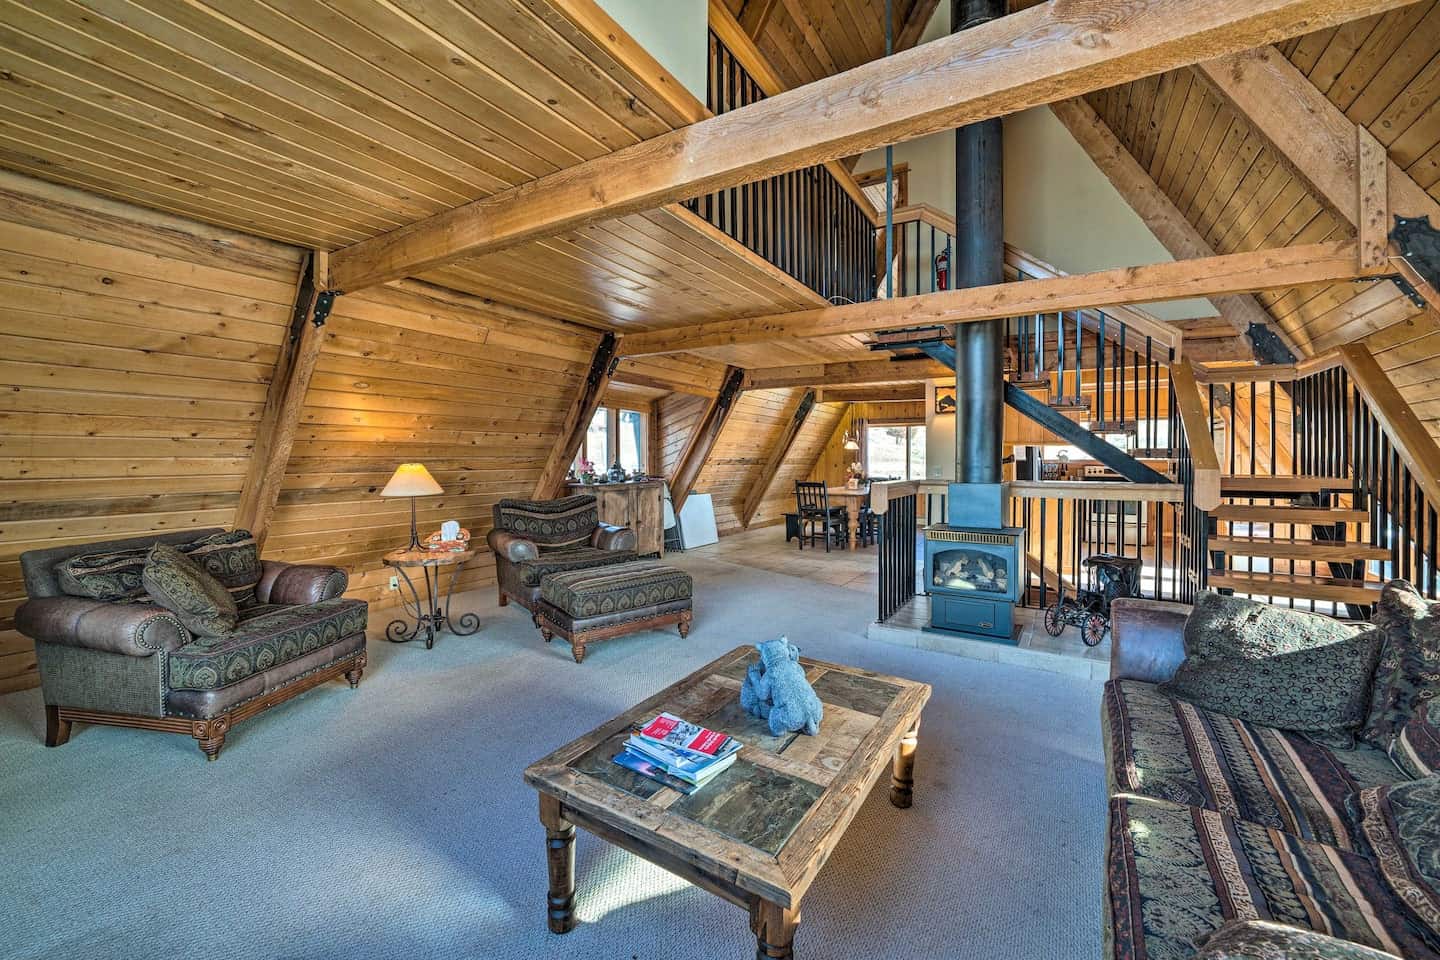 Image of Airbnb rental in Bozeman, Montana